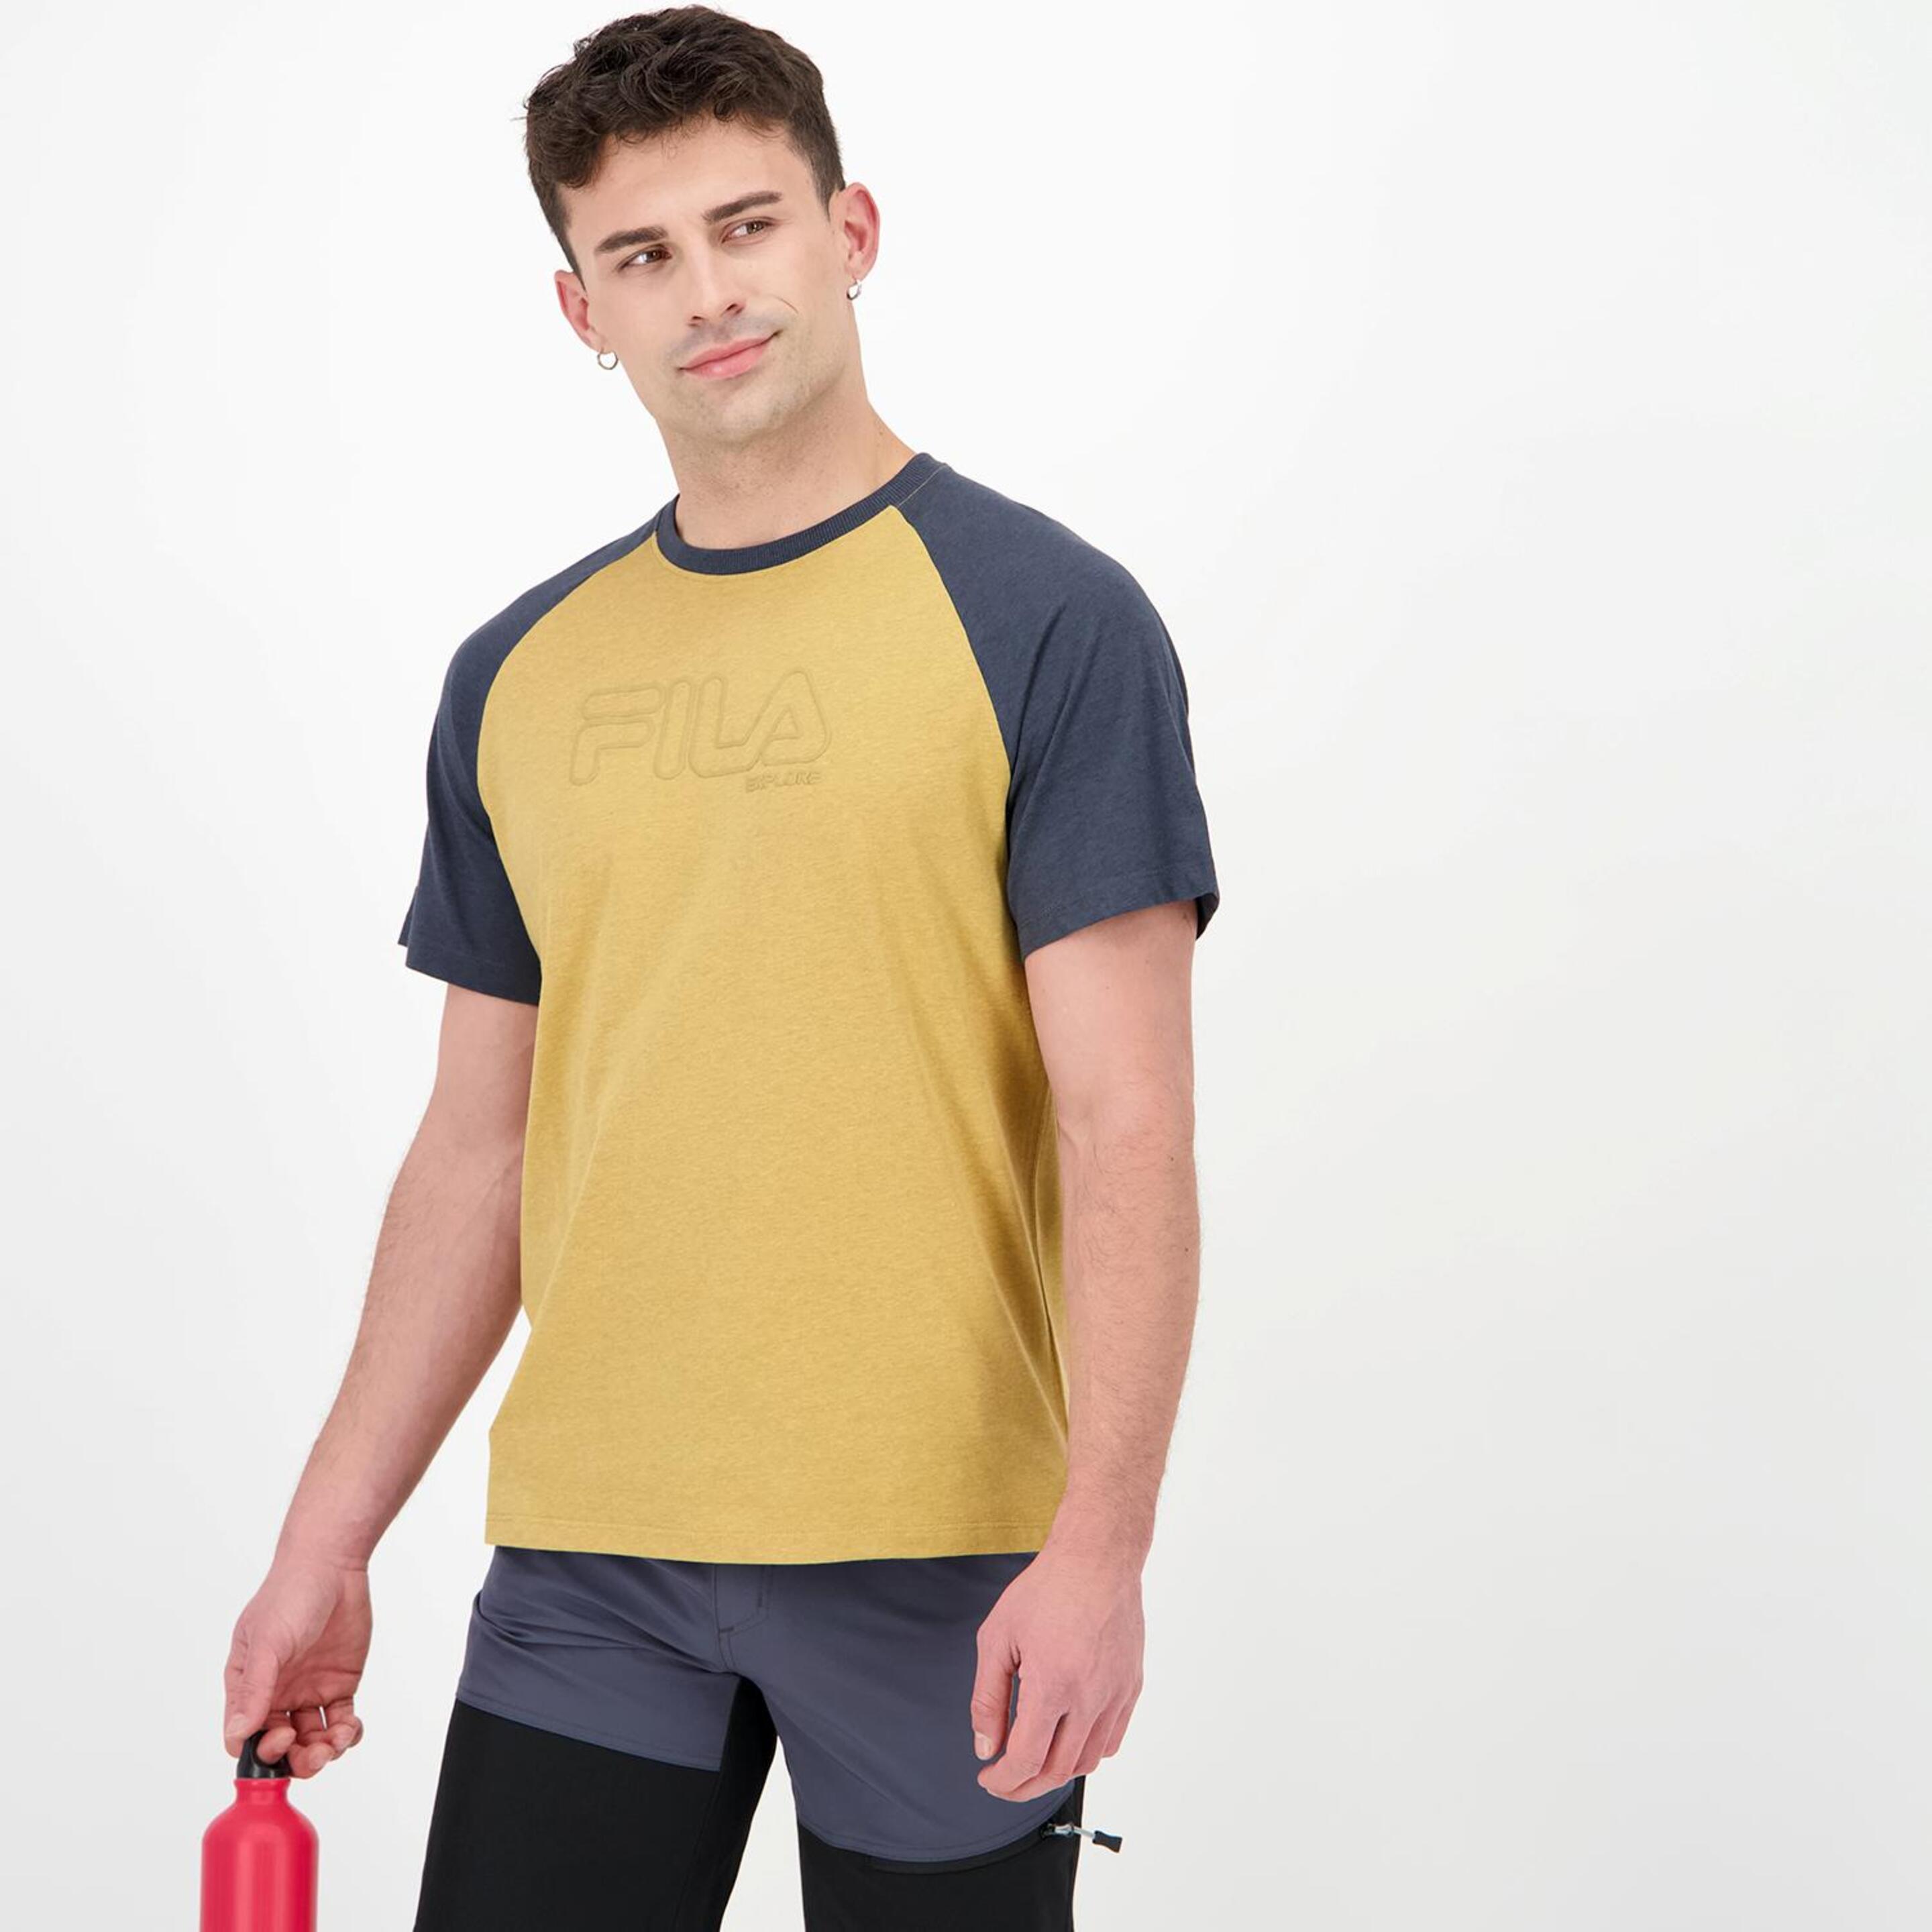 T-shirt Fila - marron - T-shirt Trekking Homem